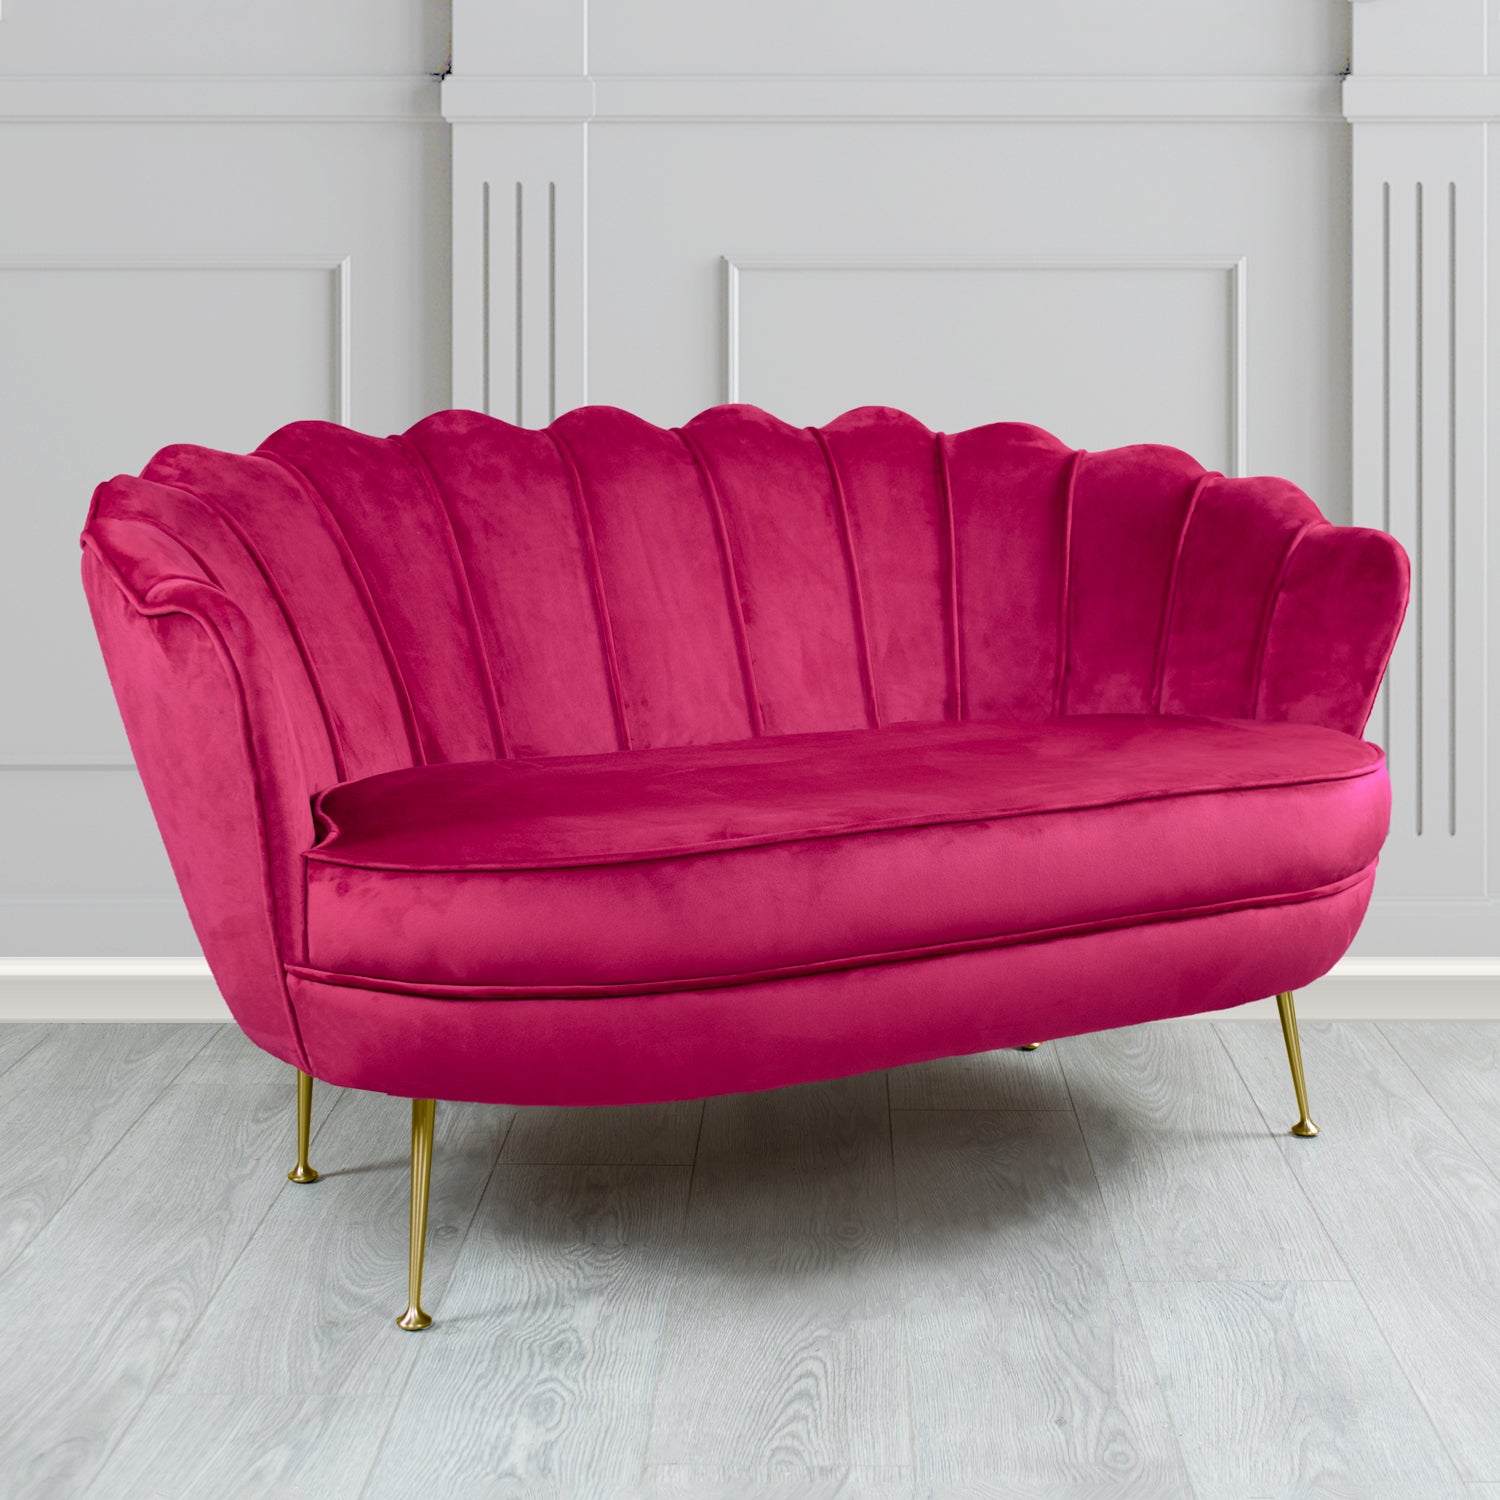 Olivia Monaco Boysenberry Plain Velvet Fabric 2 Seater Shell Sofa - The Tub Chair Shop